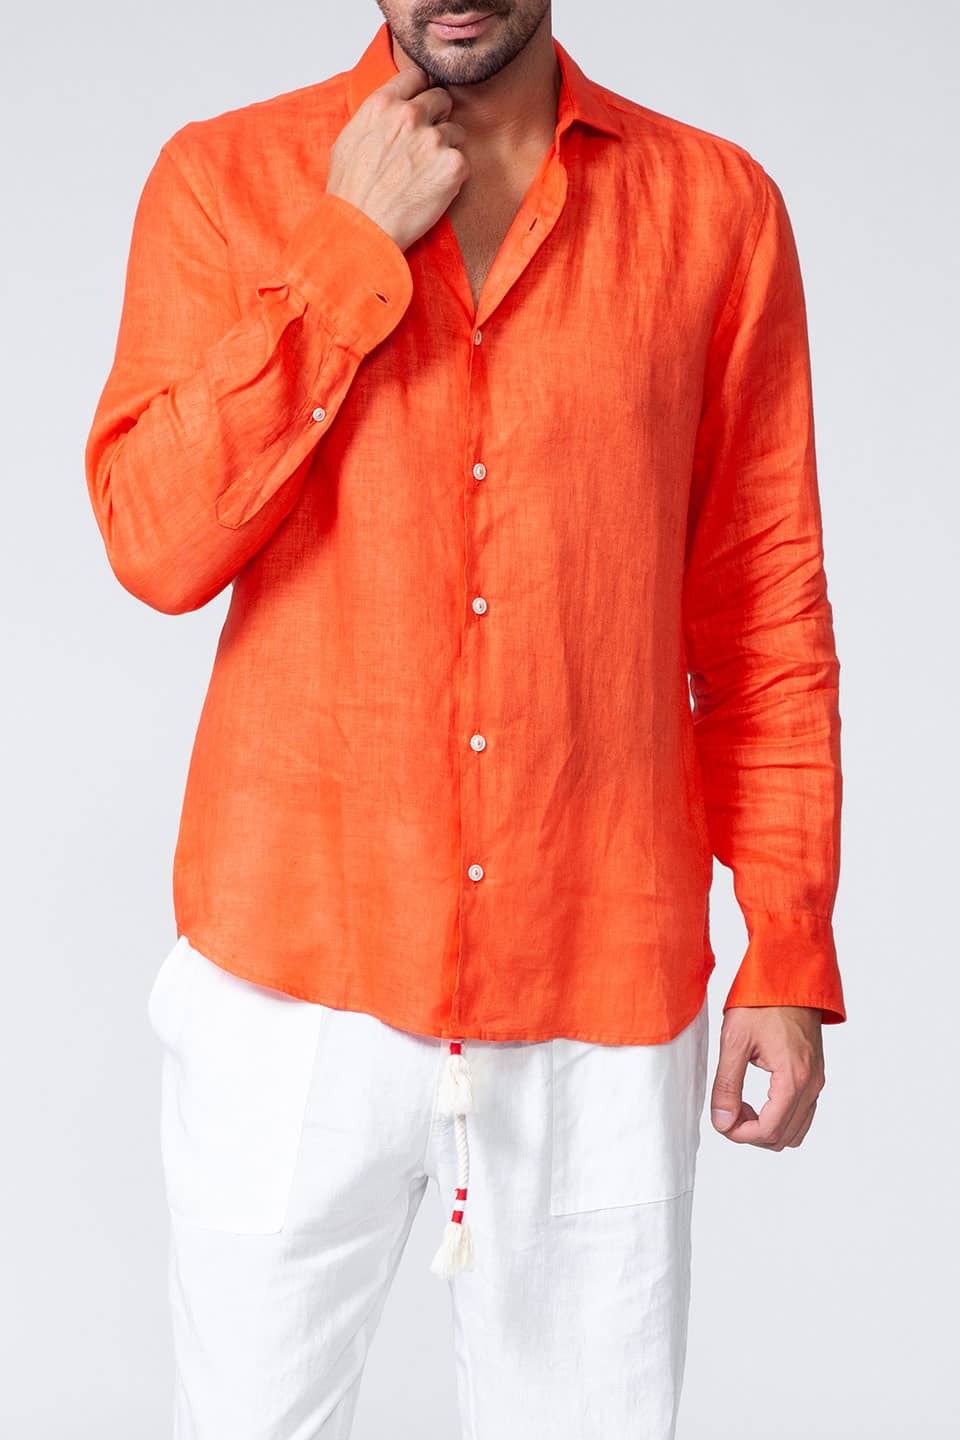 Thumbnail for Product gallery 7, MC saint barth male pamplona shirt orange front